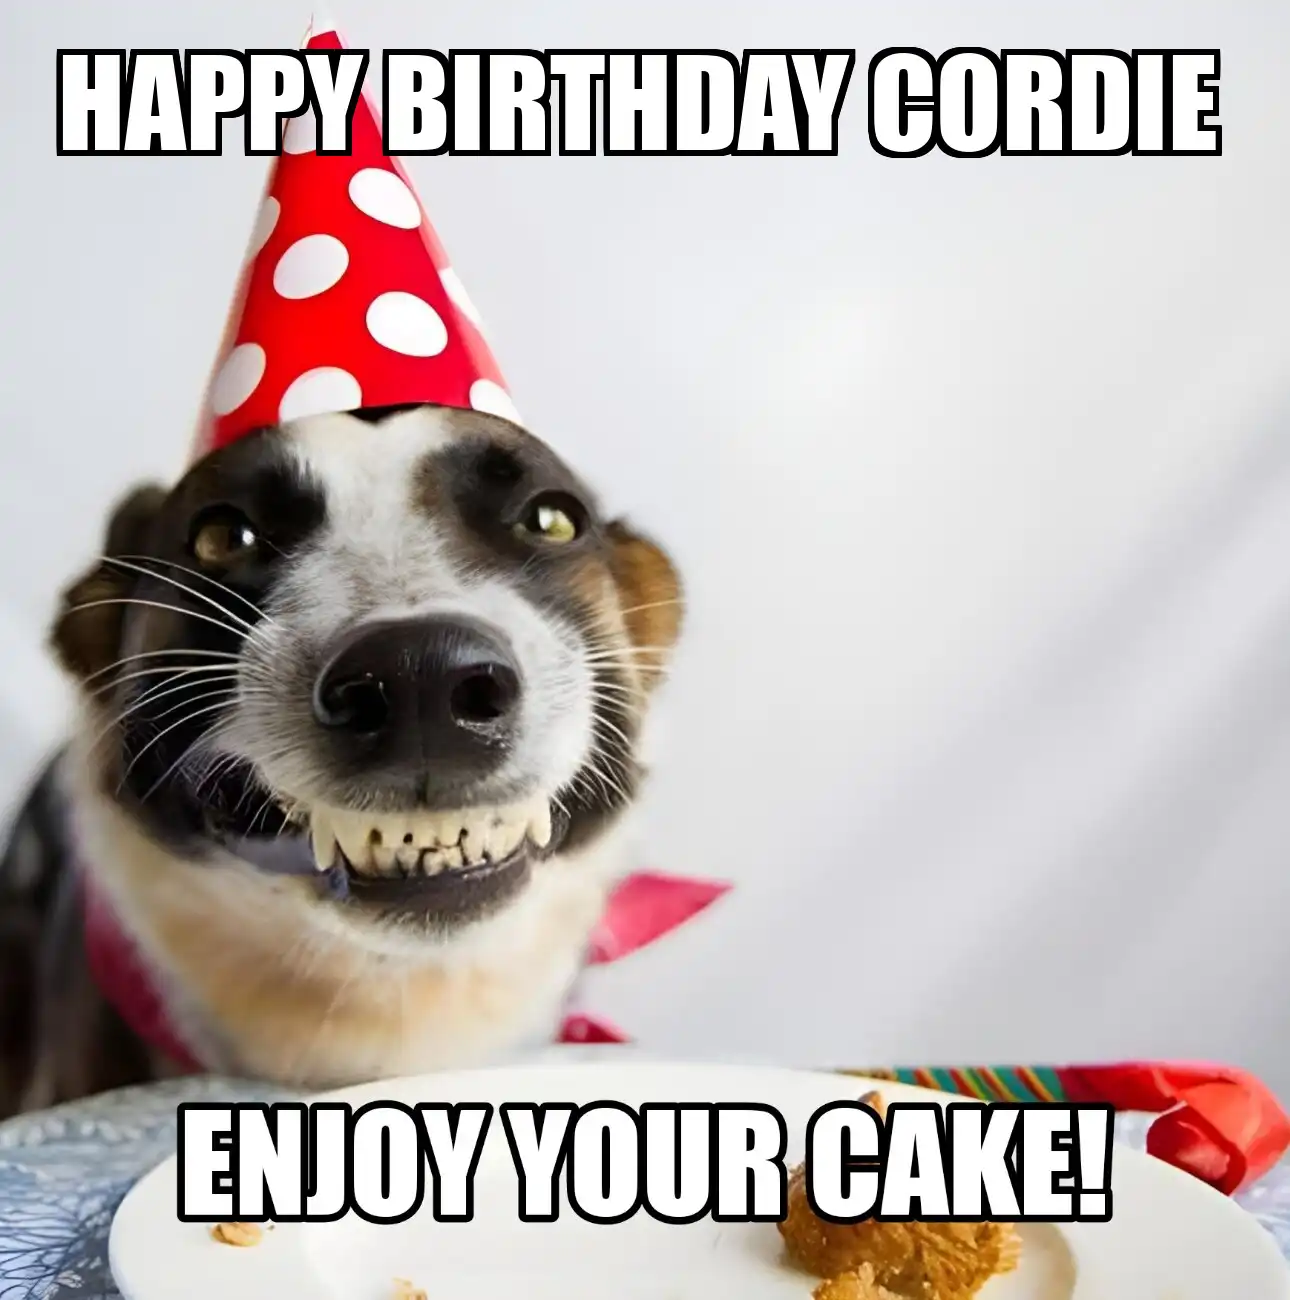 Happy Birthday Cordie Enjoy Your Cake Dog Meme